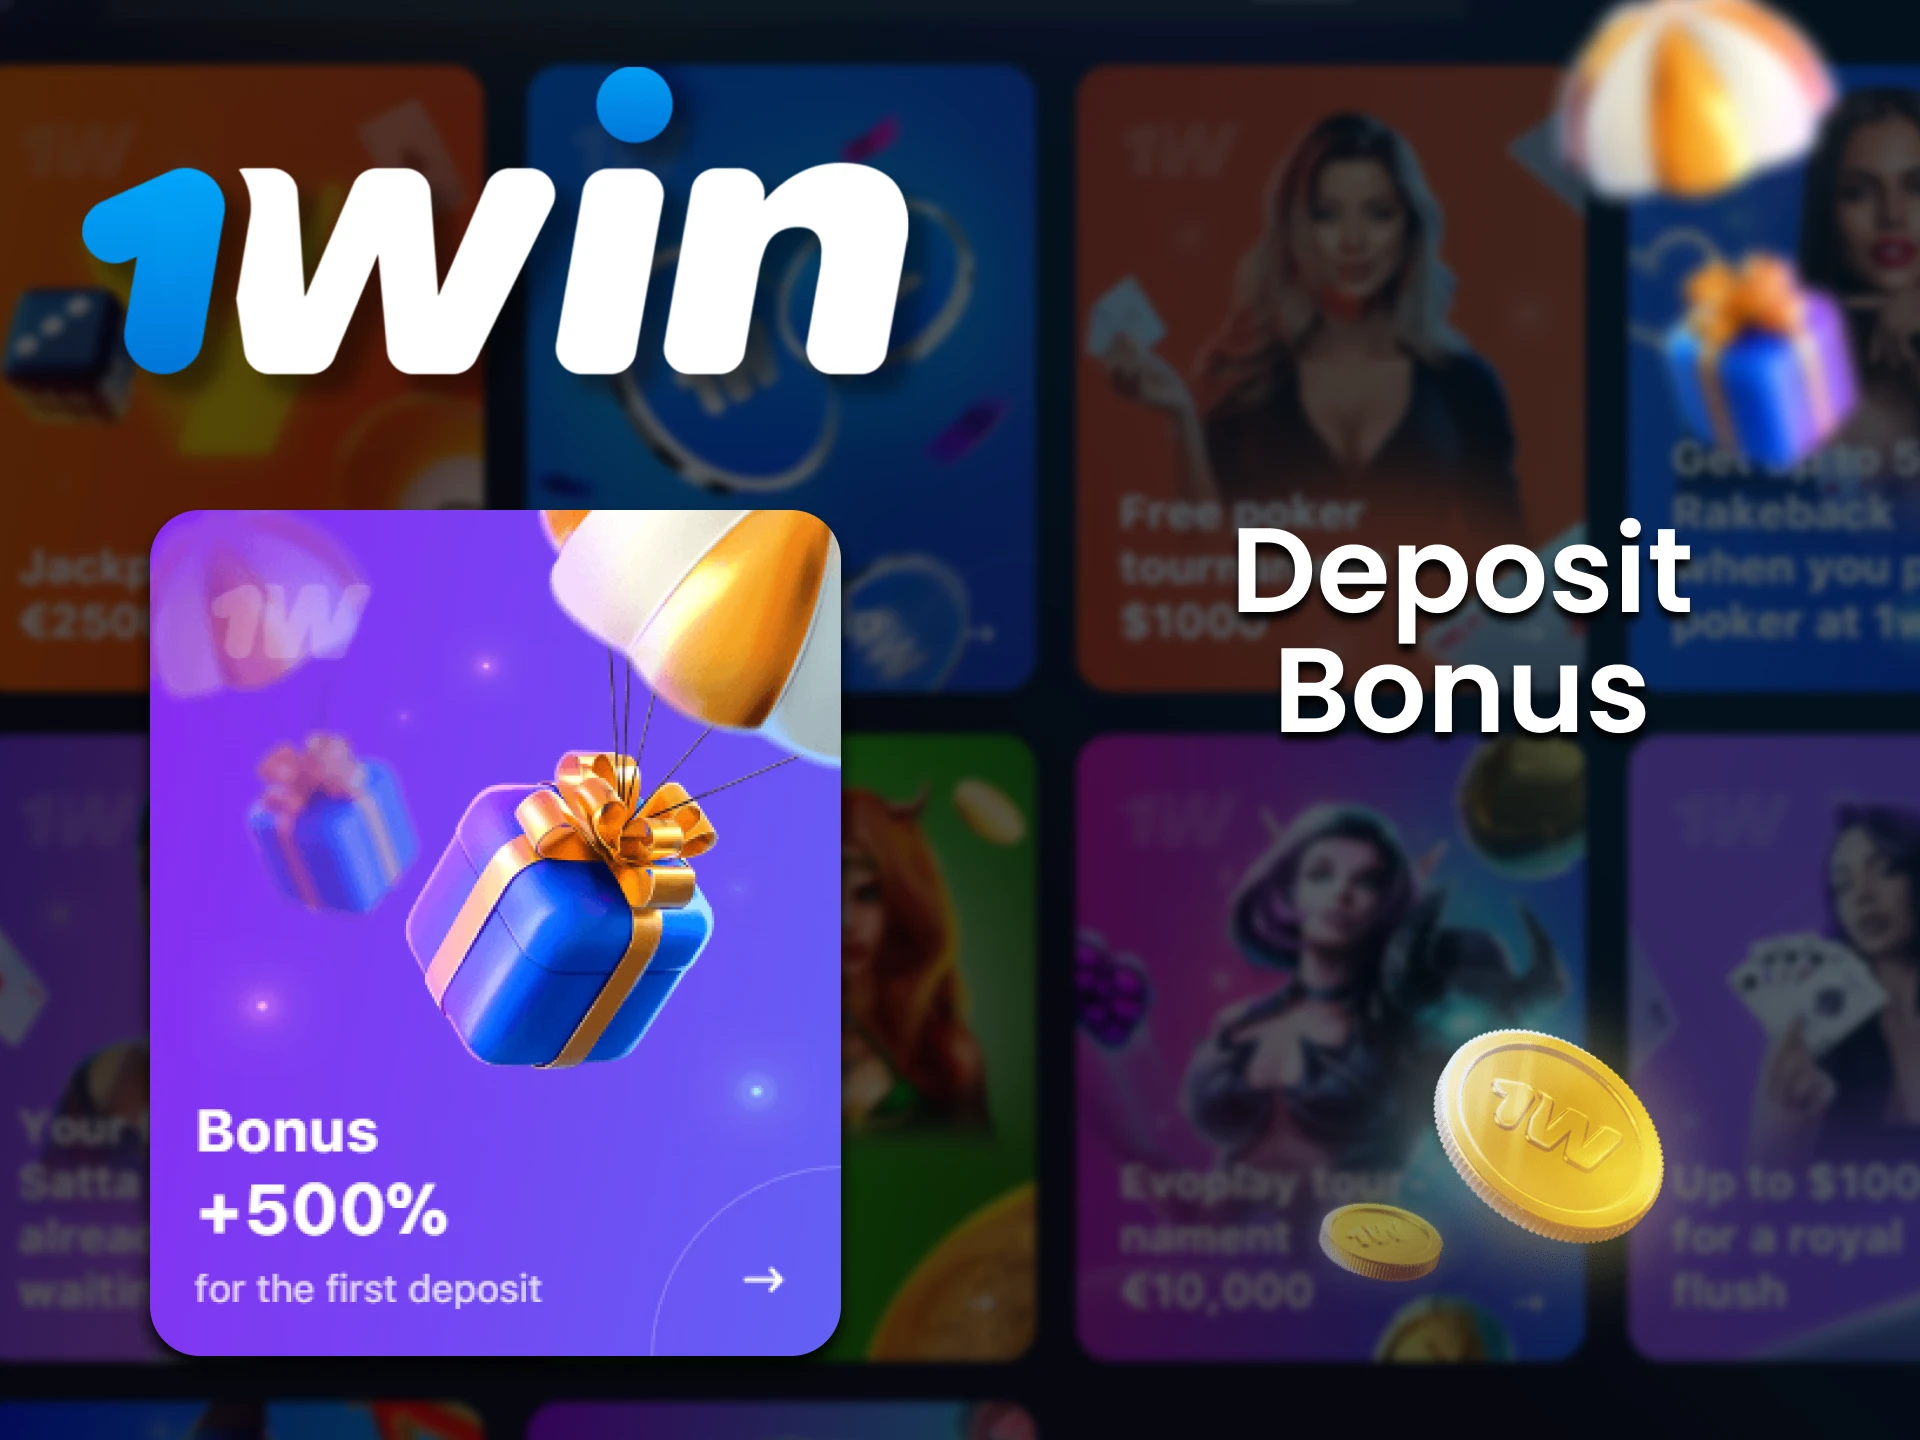 Get your first deposit bonus at 1win.